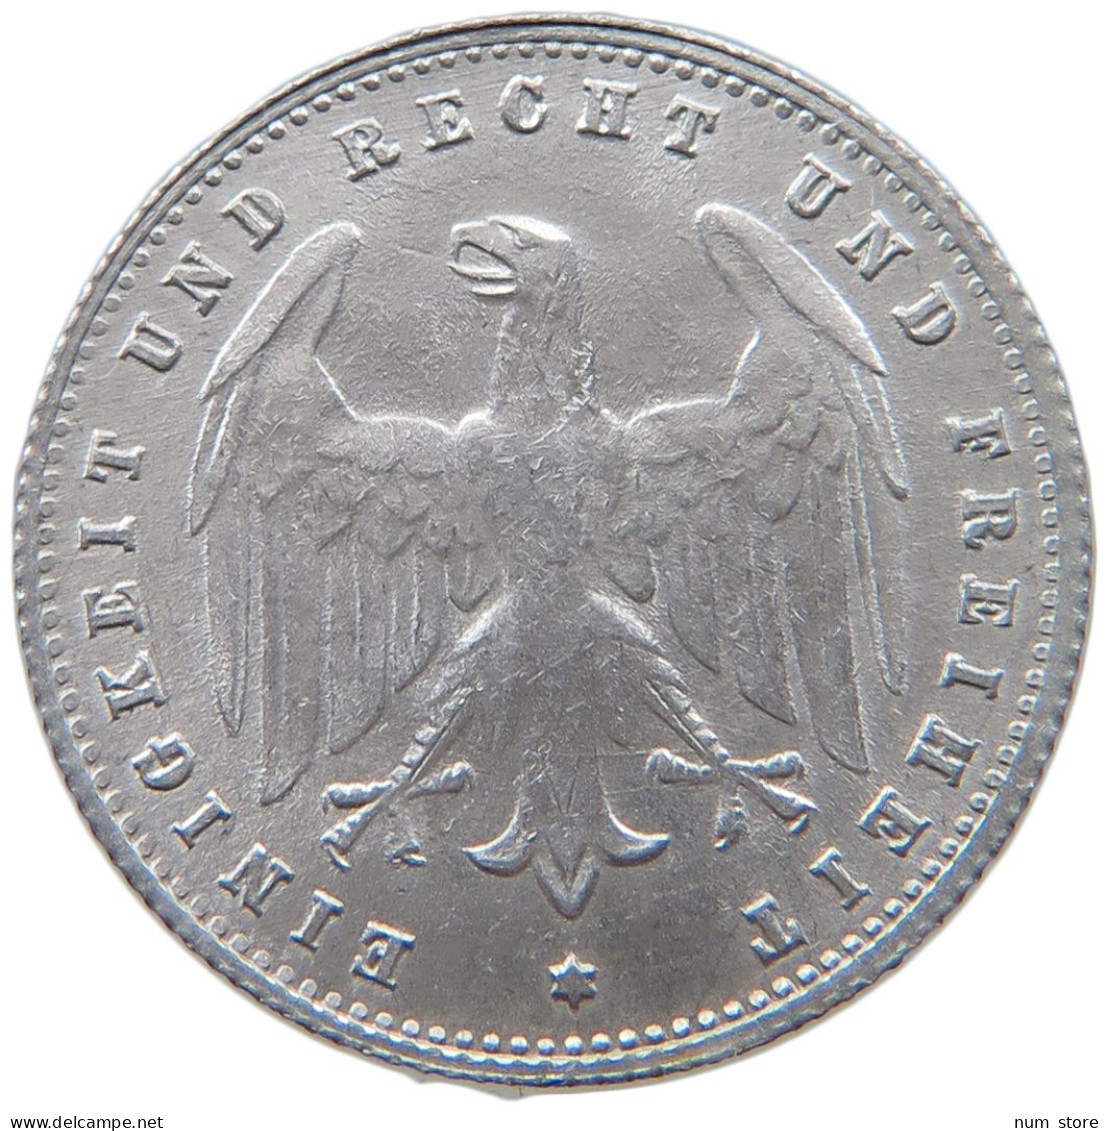 WEIMARER REPUBLIK 200 MARK 1923 G  #MA 098795 - 200 & 500 Mark